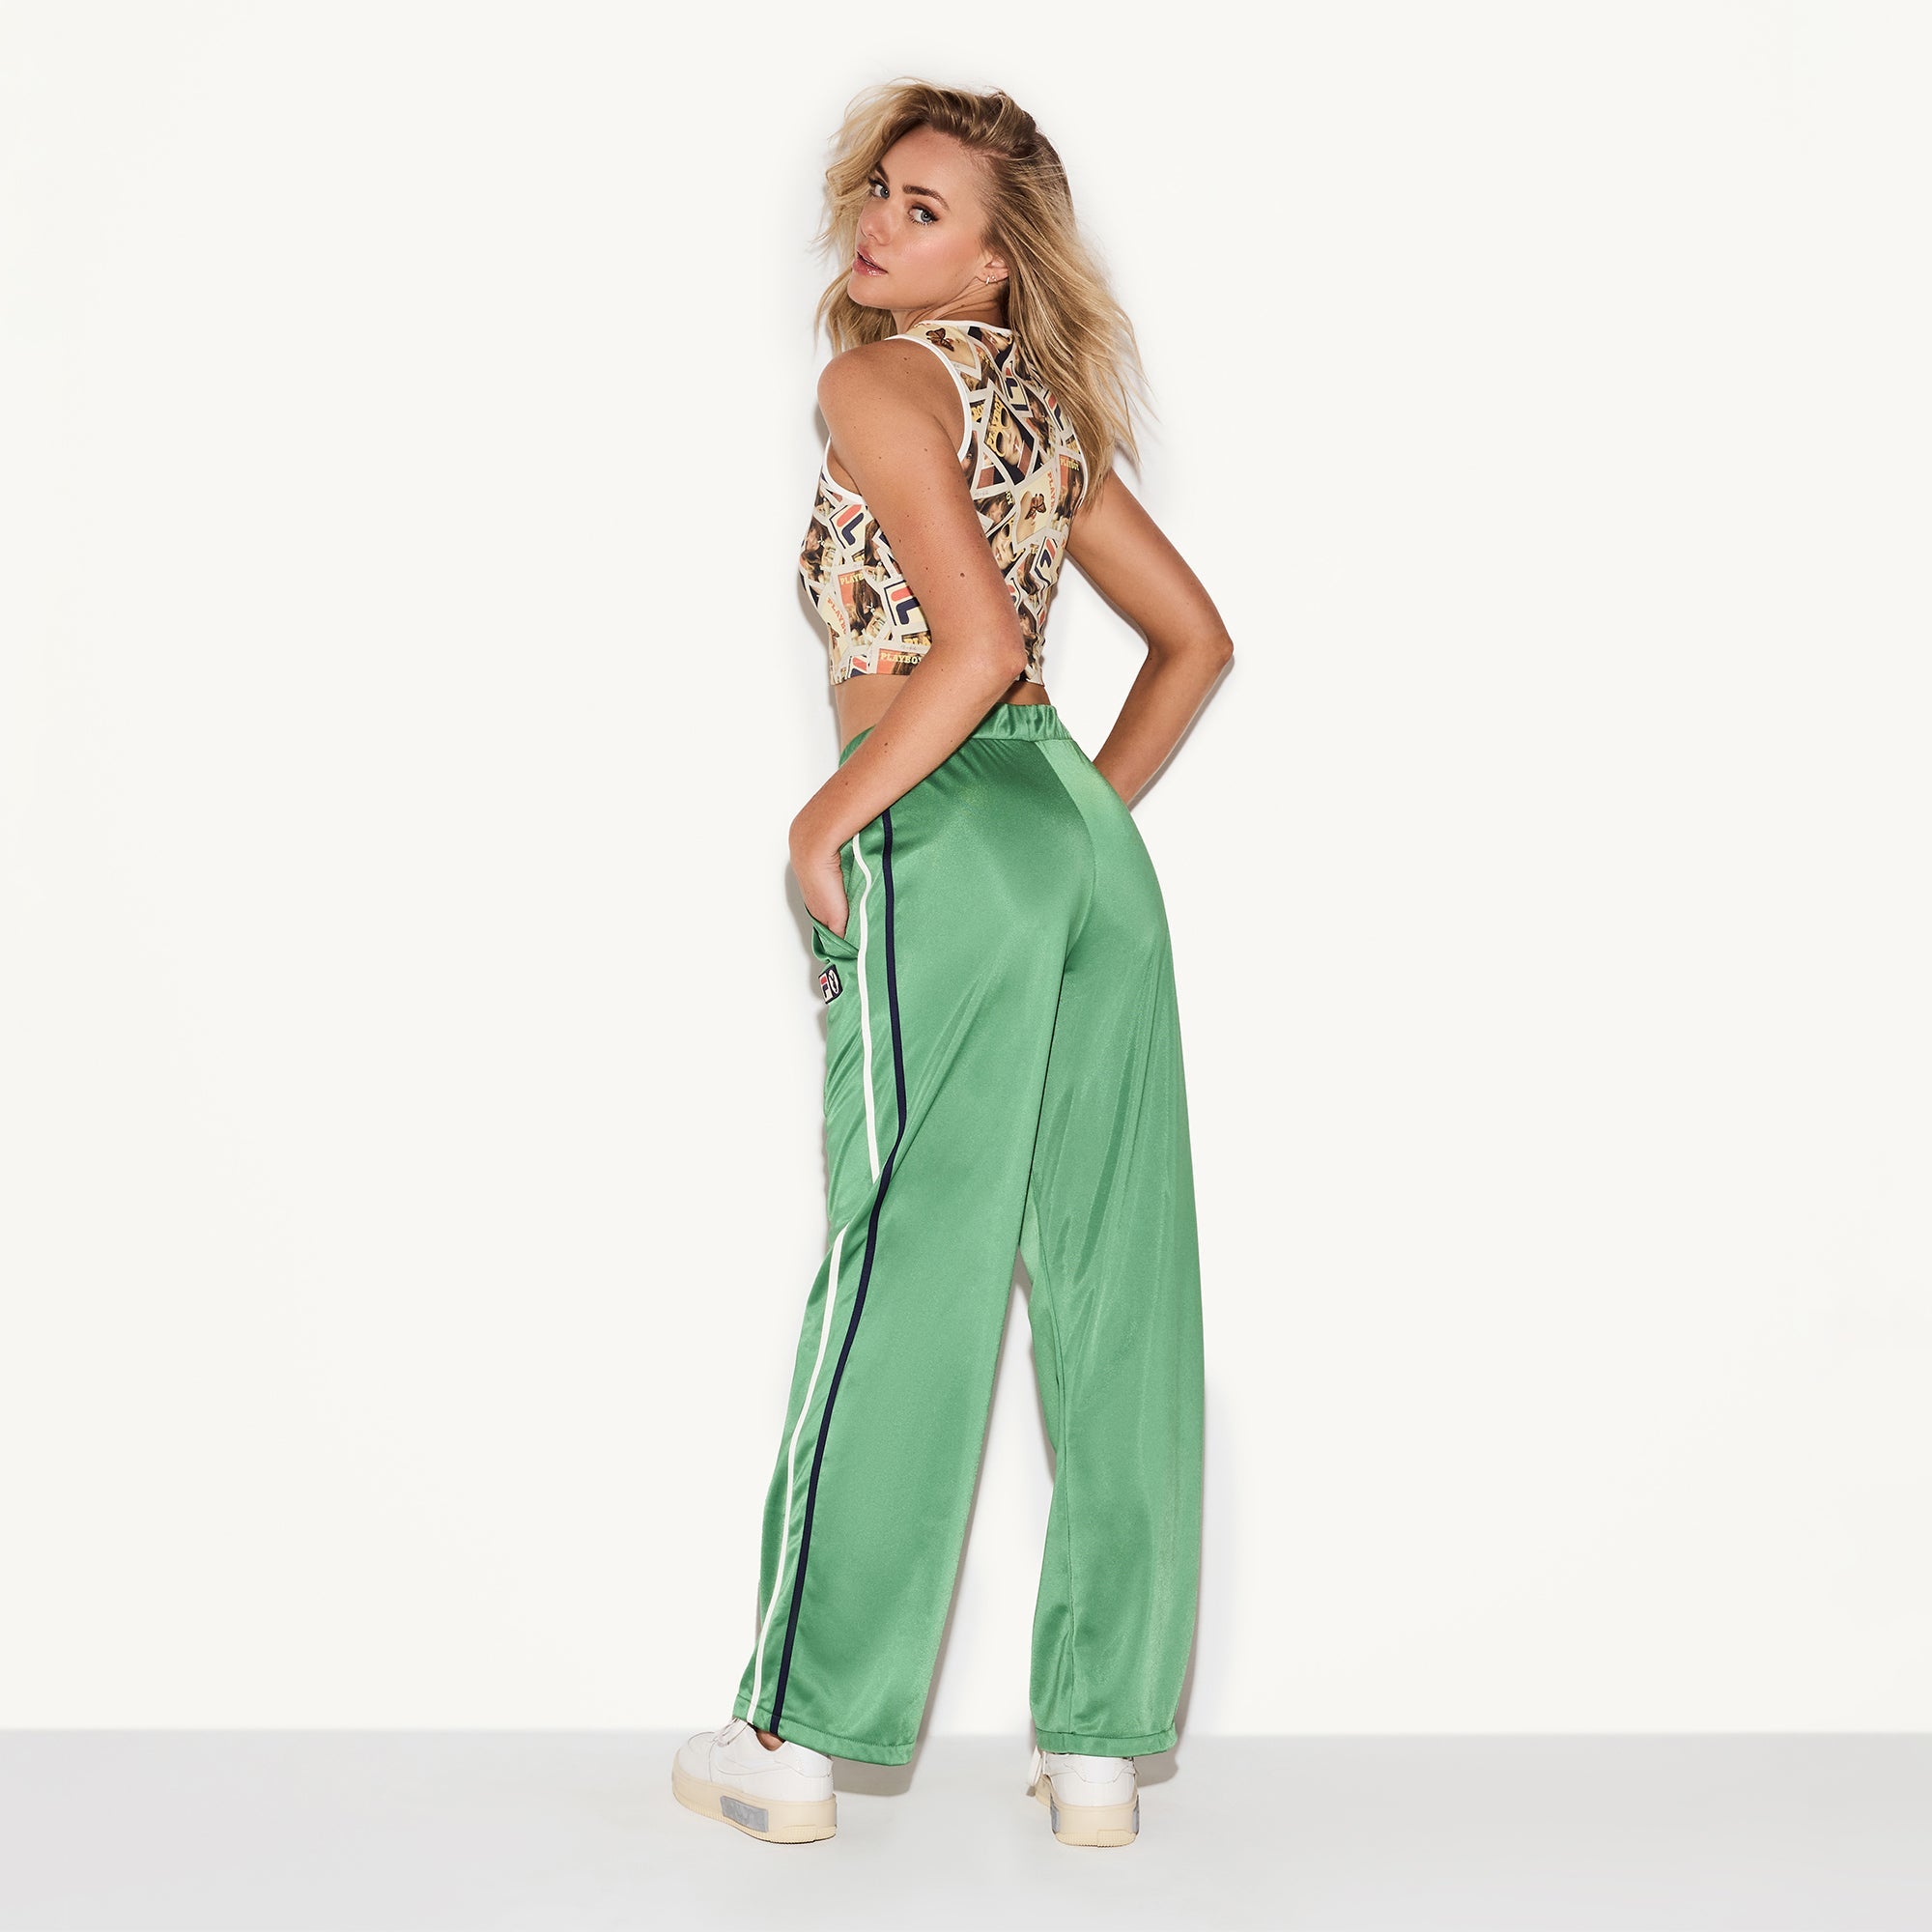 Fila Green Athletic Pants for Women